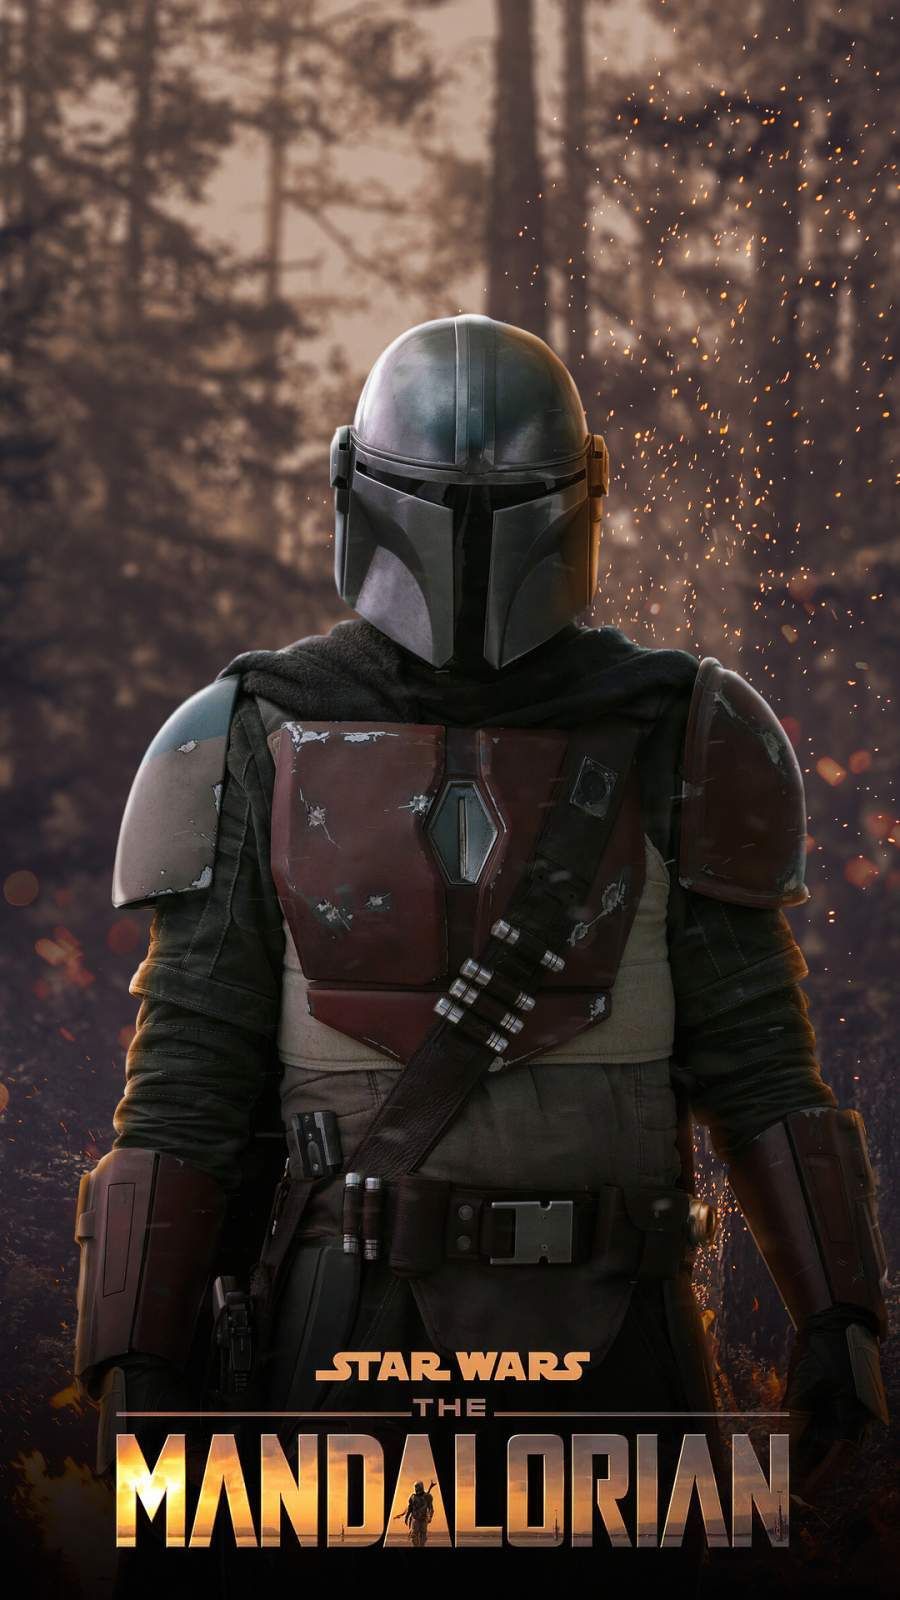 The Mandalorian iPhone Wallpaper. Star wars background, Star wars image, Star wars trooper